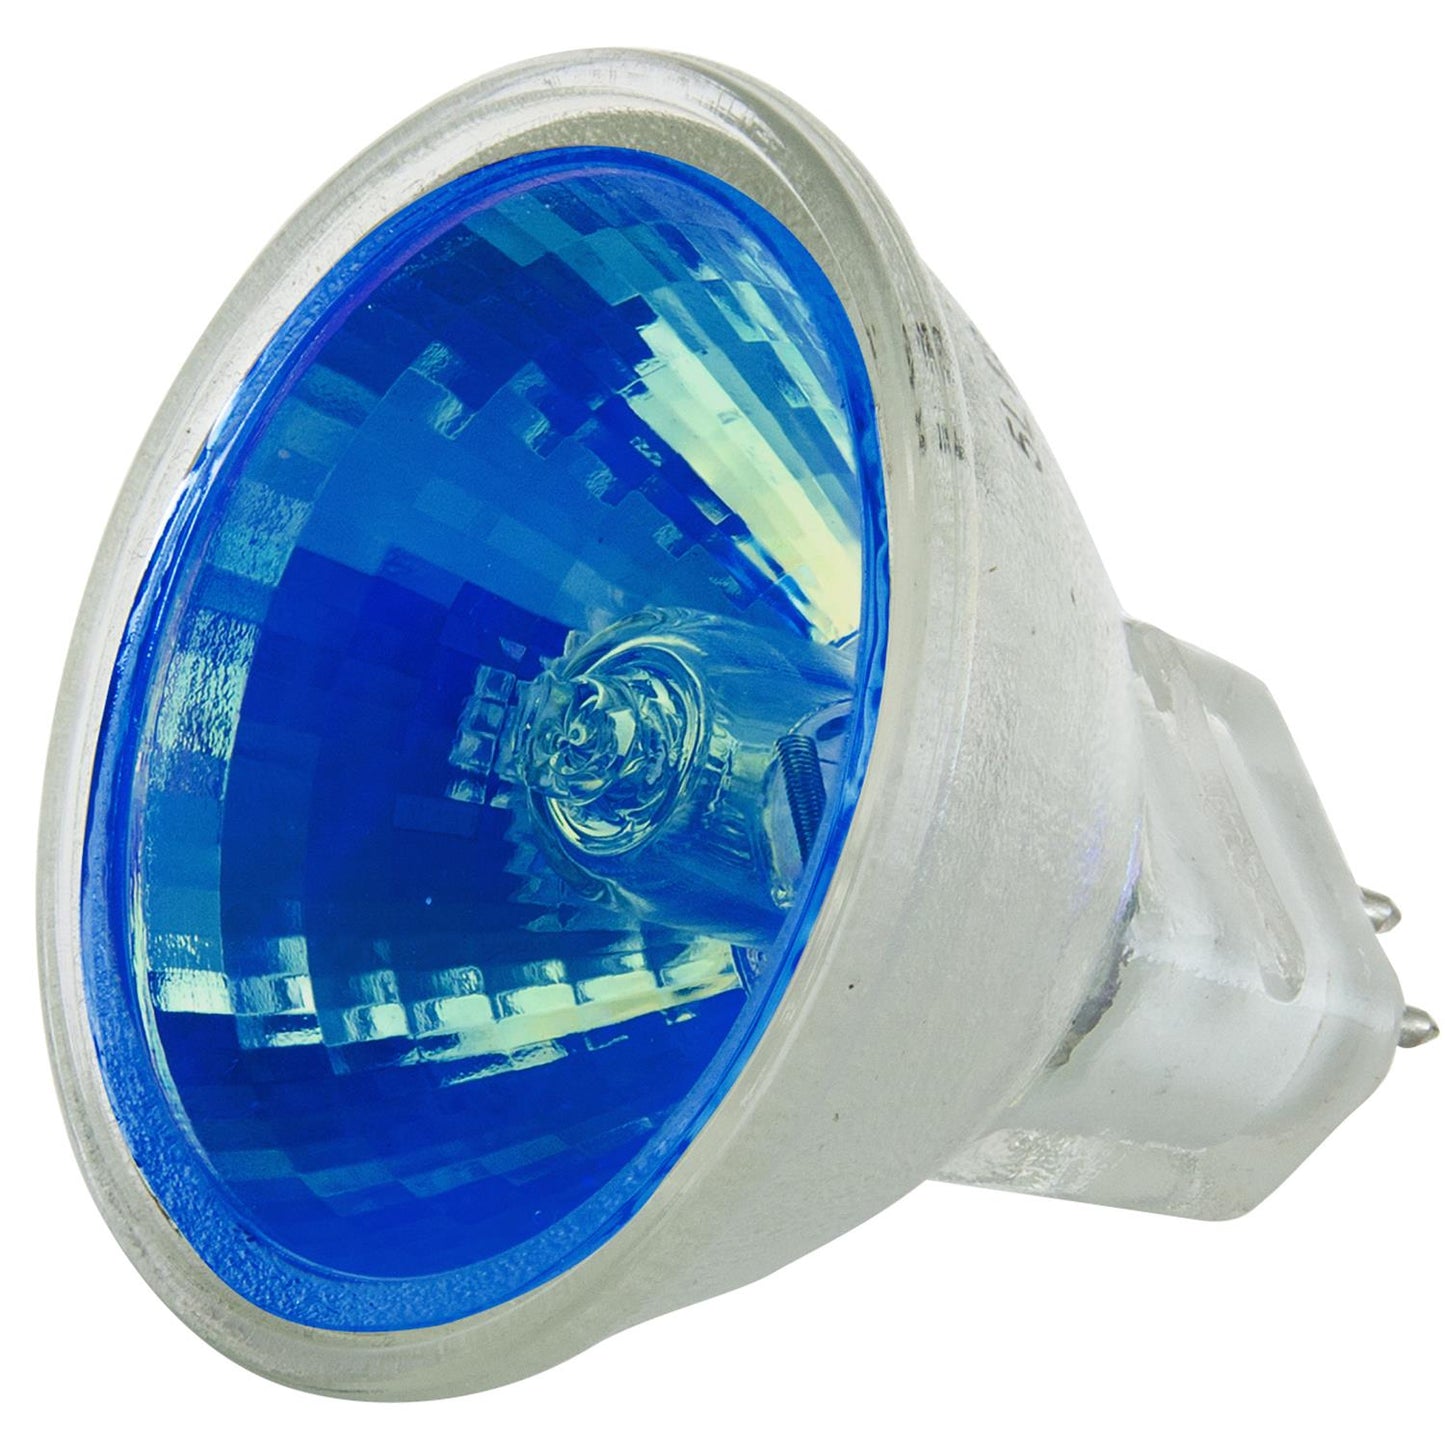 Sunlite 20MR11/SP/12V/B Color MR11 10° Narrow Spot Halogen Lamps, 20-Watt, 12-Volt, GU4 2-Pin Base, Cover Glass, Dimmable, 2,000 Hour Life Span, Blue (24 Pack)